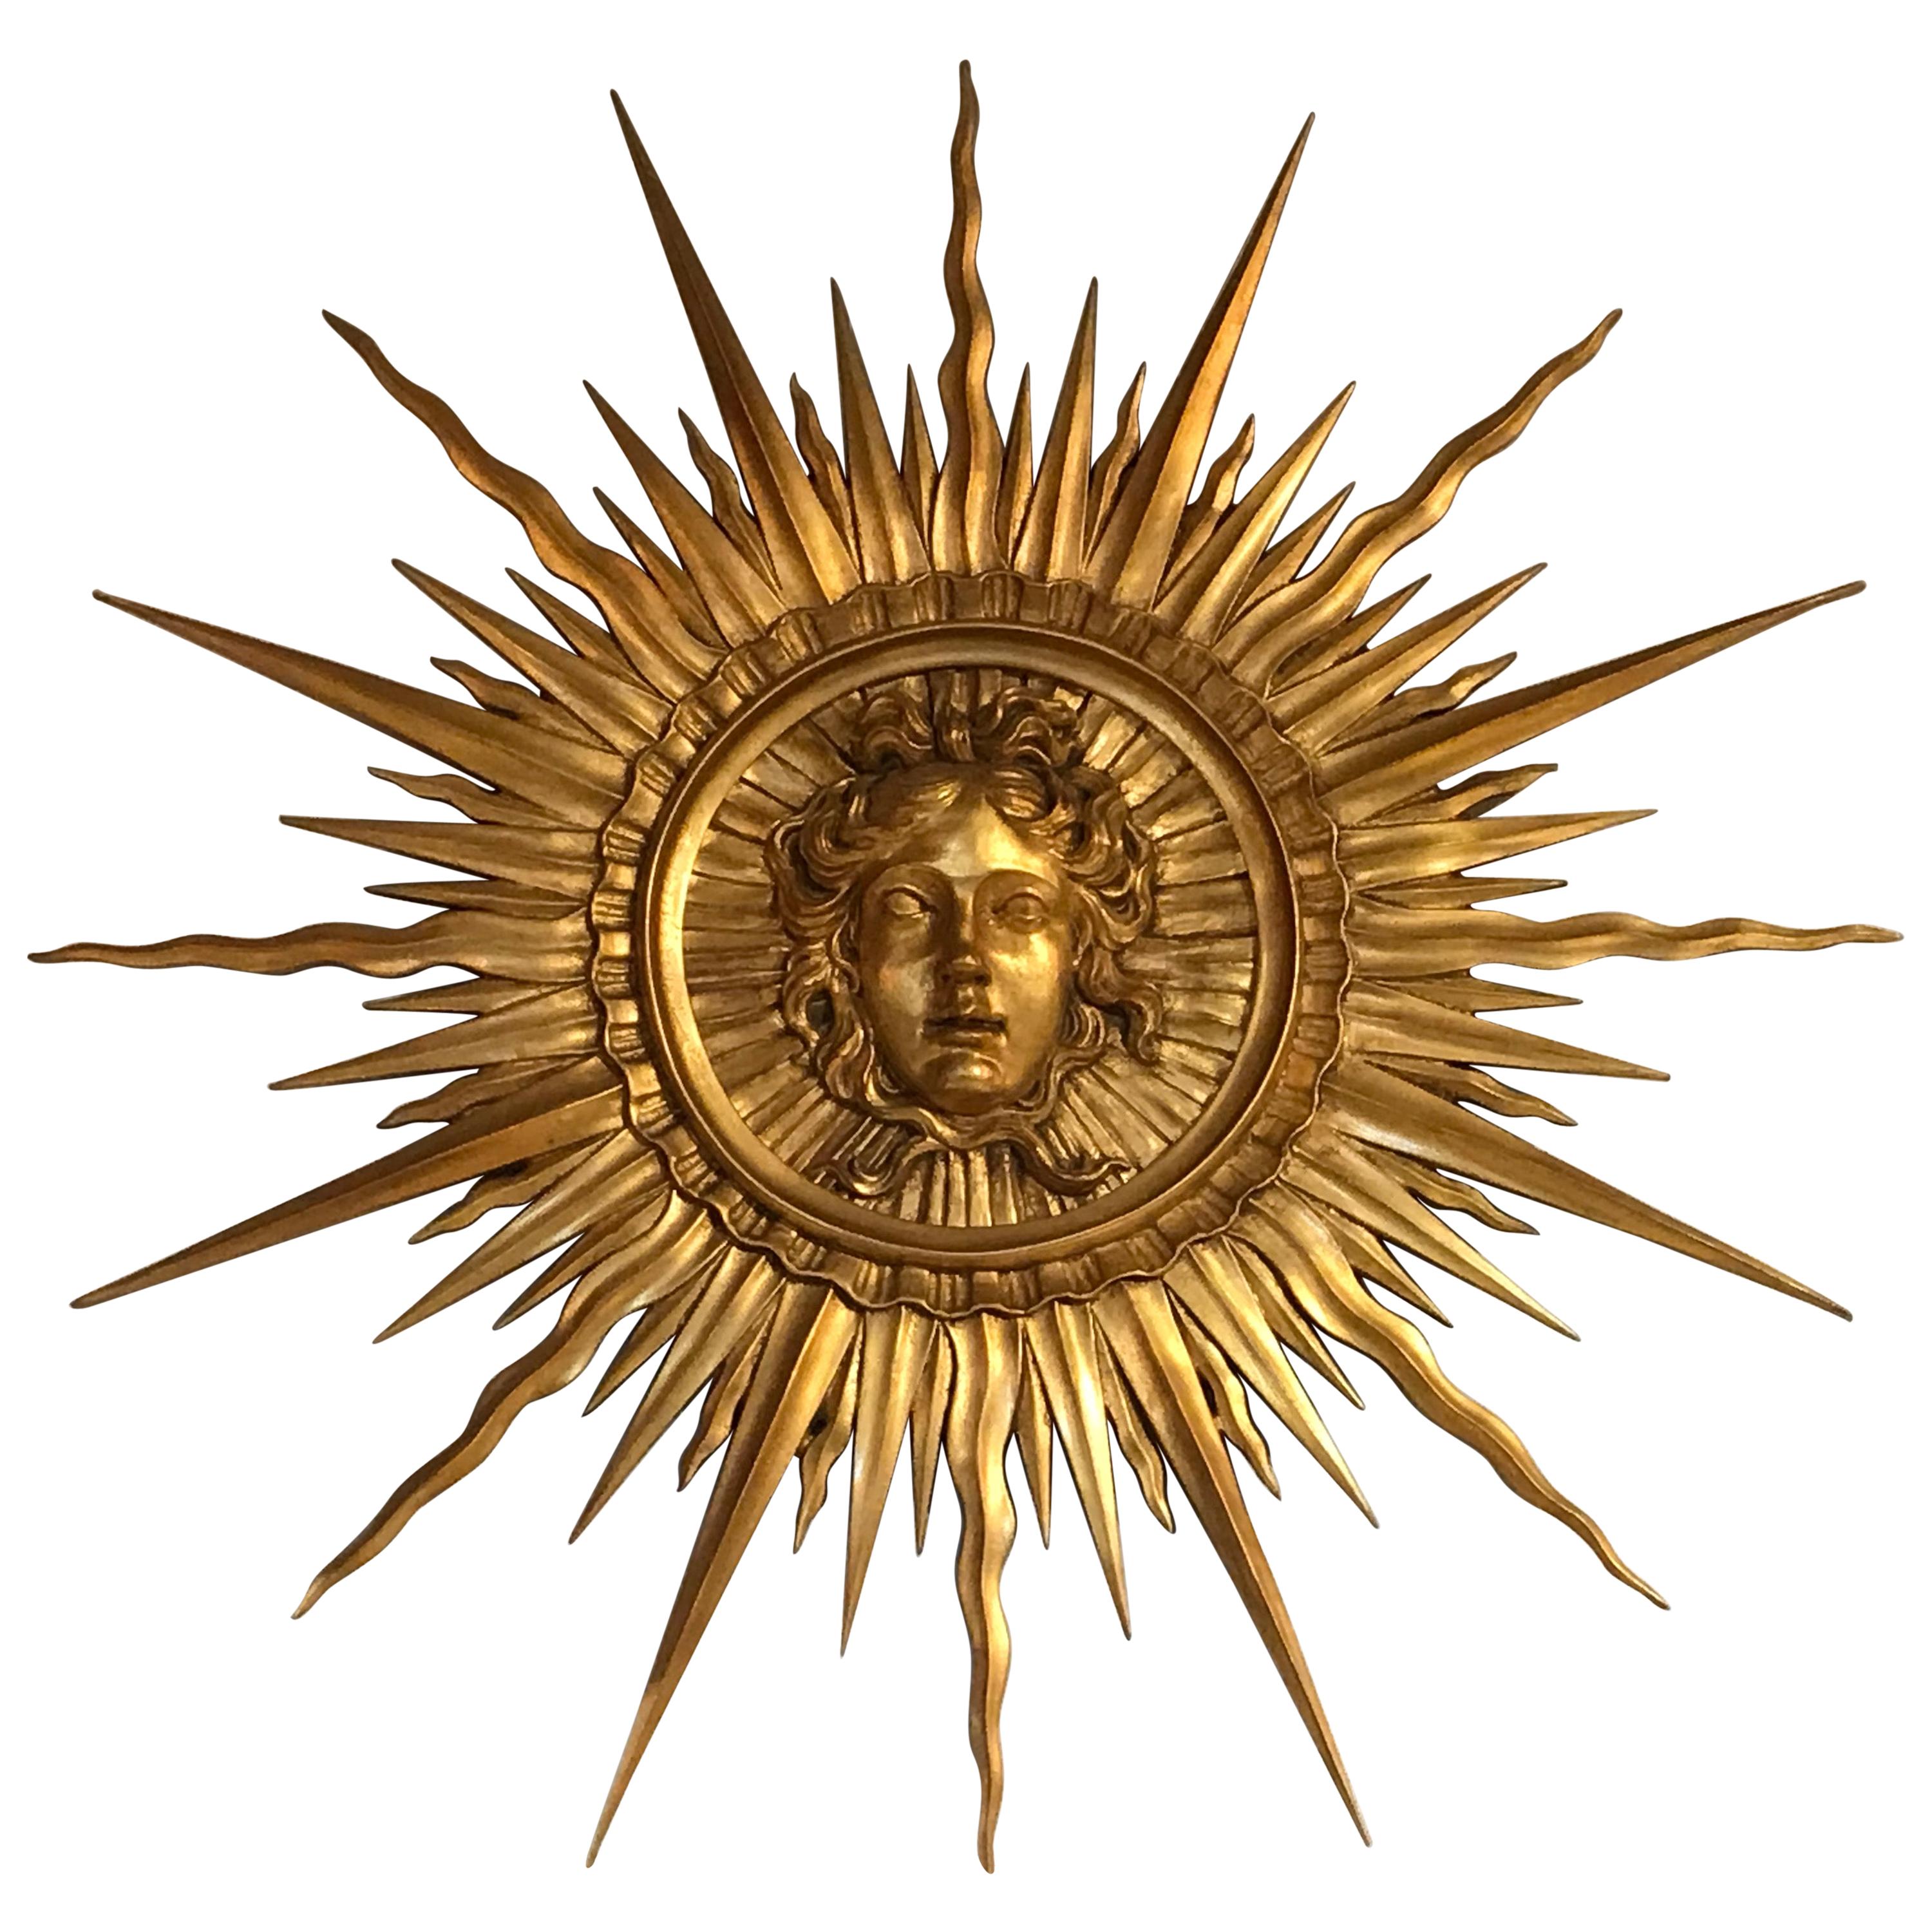 Very Fine Giltwood Sunburst Ornament Depicting the Head of Apollo